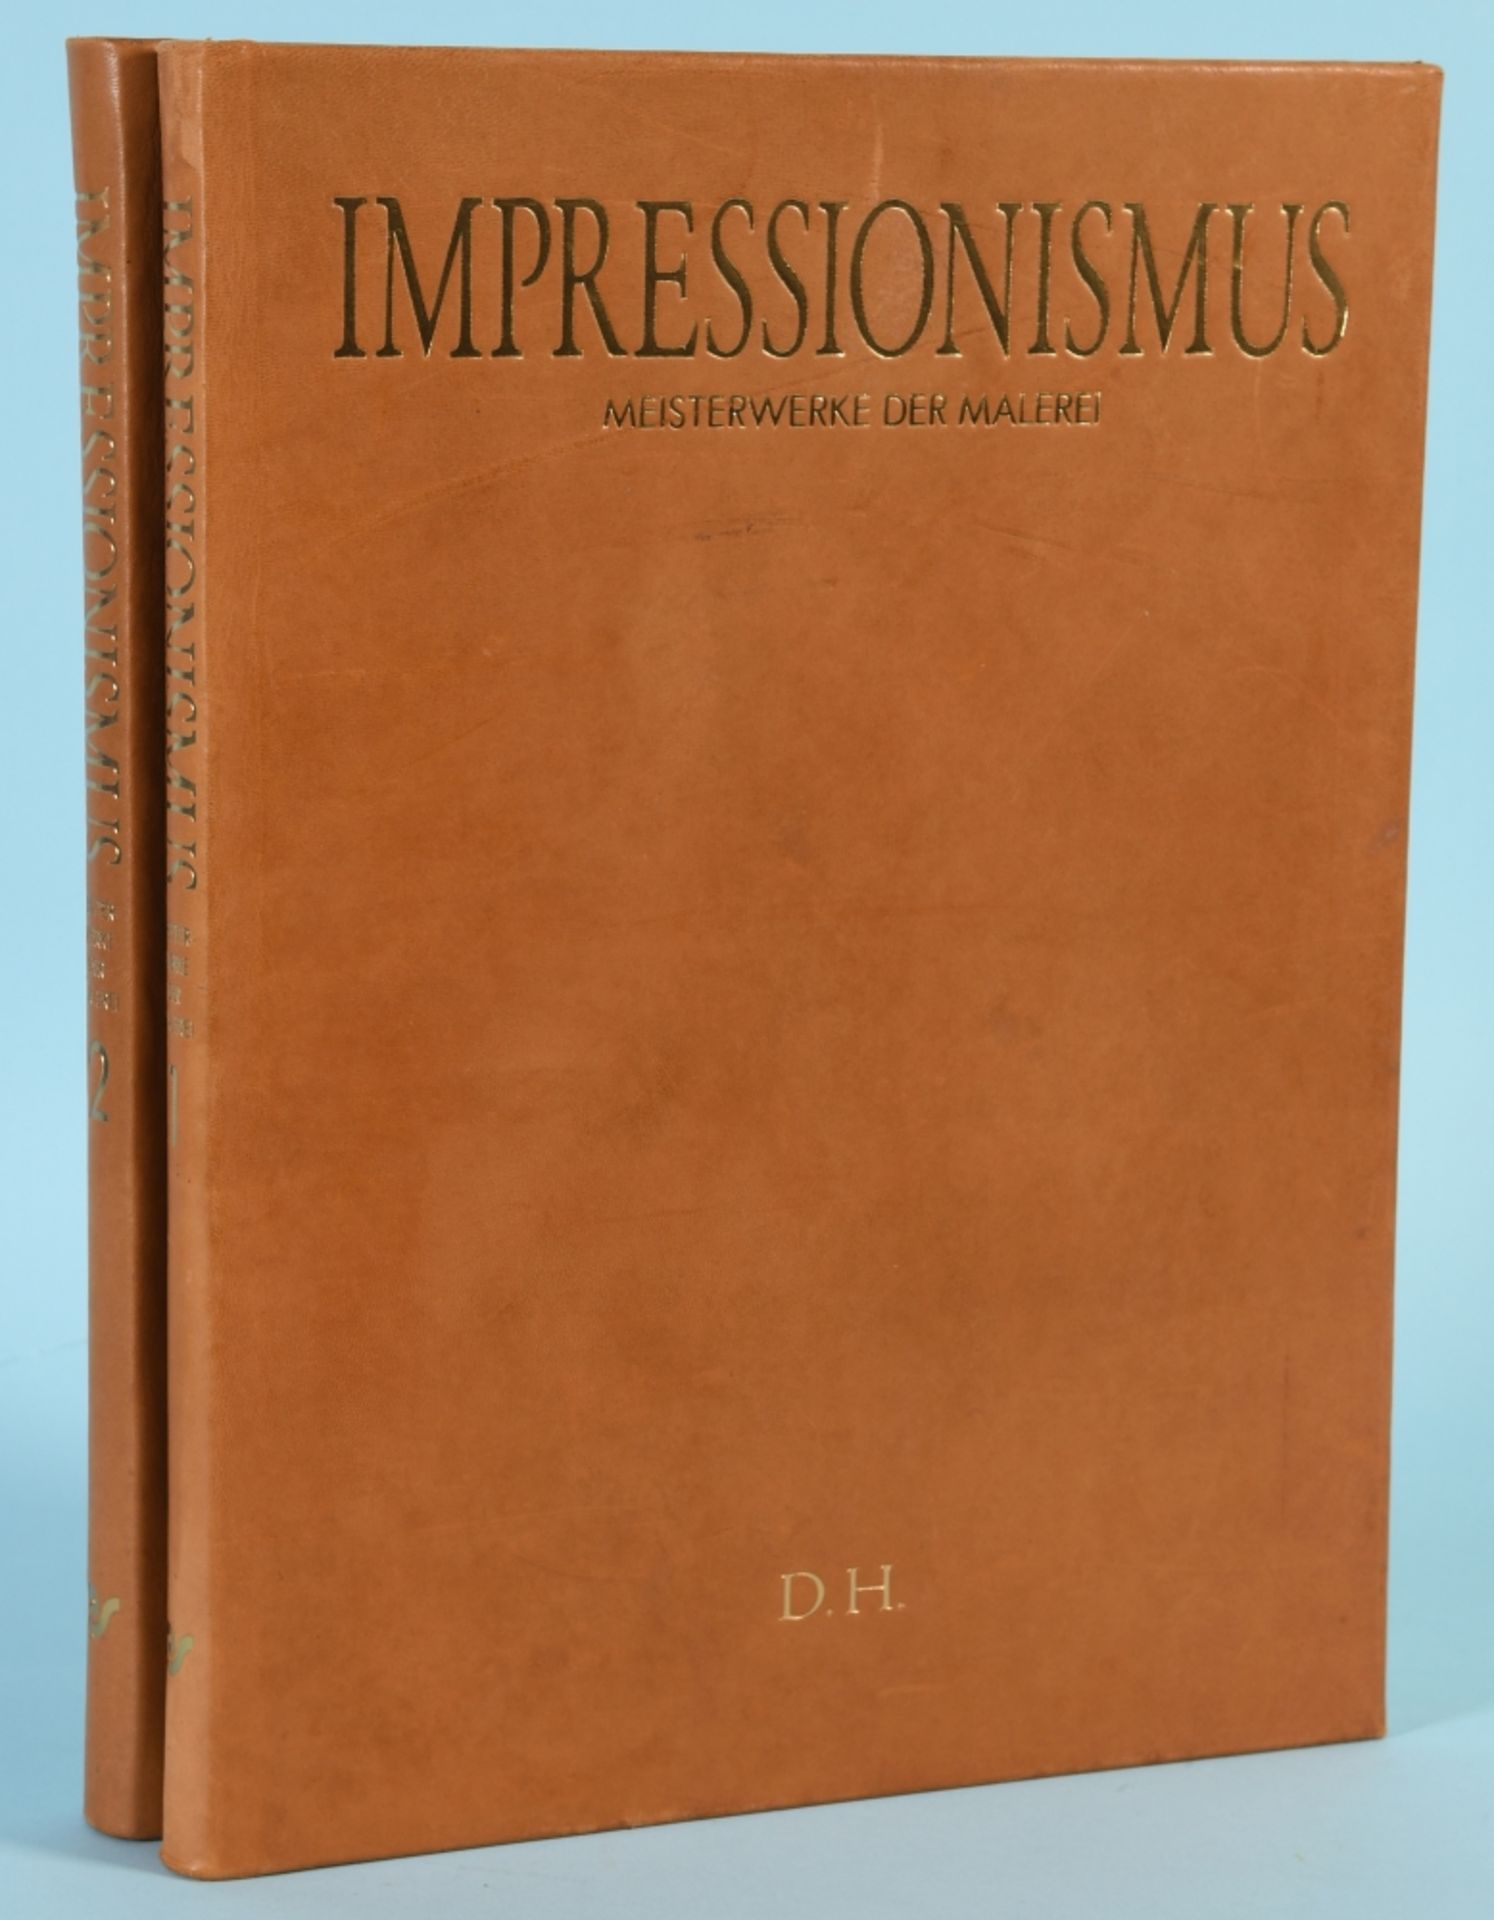 Denvir, Bernard "Impressionismus - Meisterwerke der Malerei", 2 Bde.